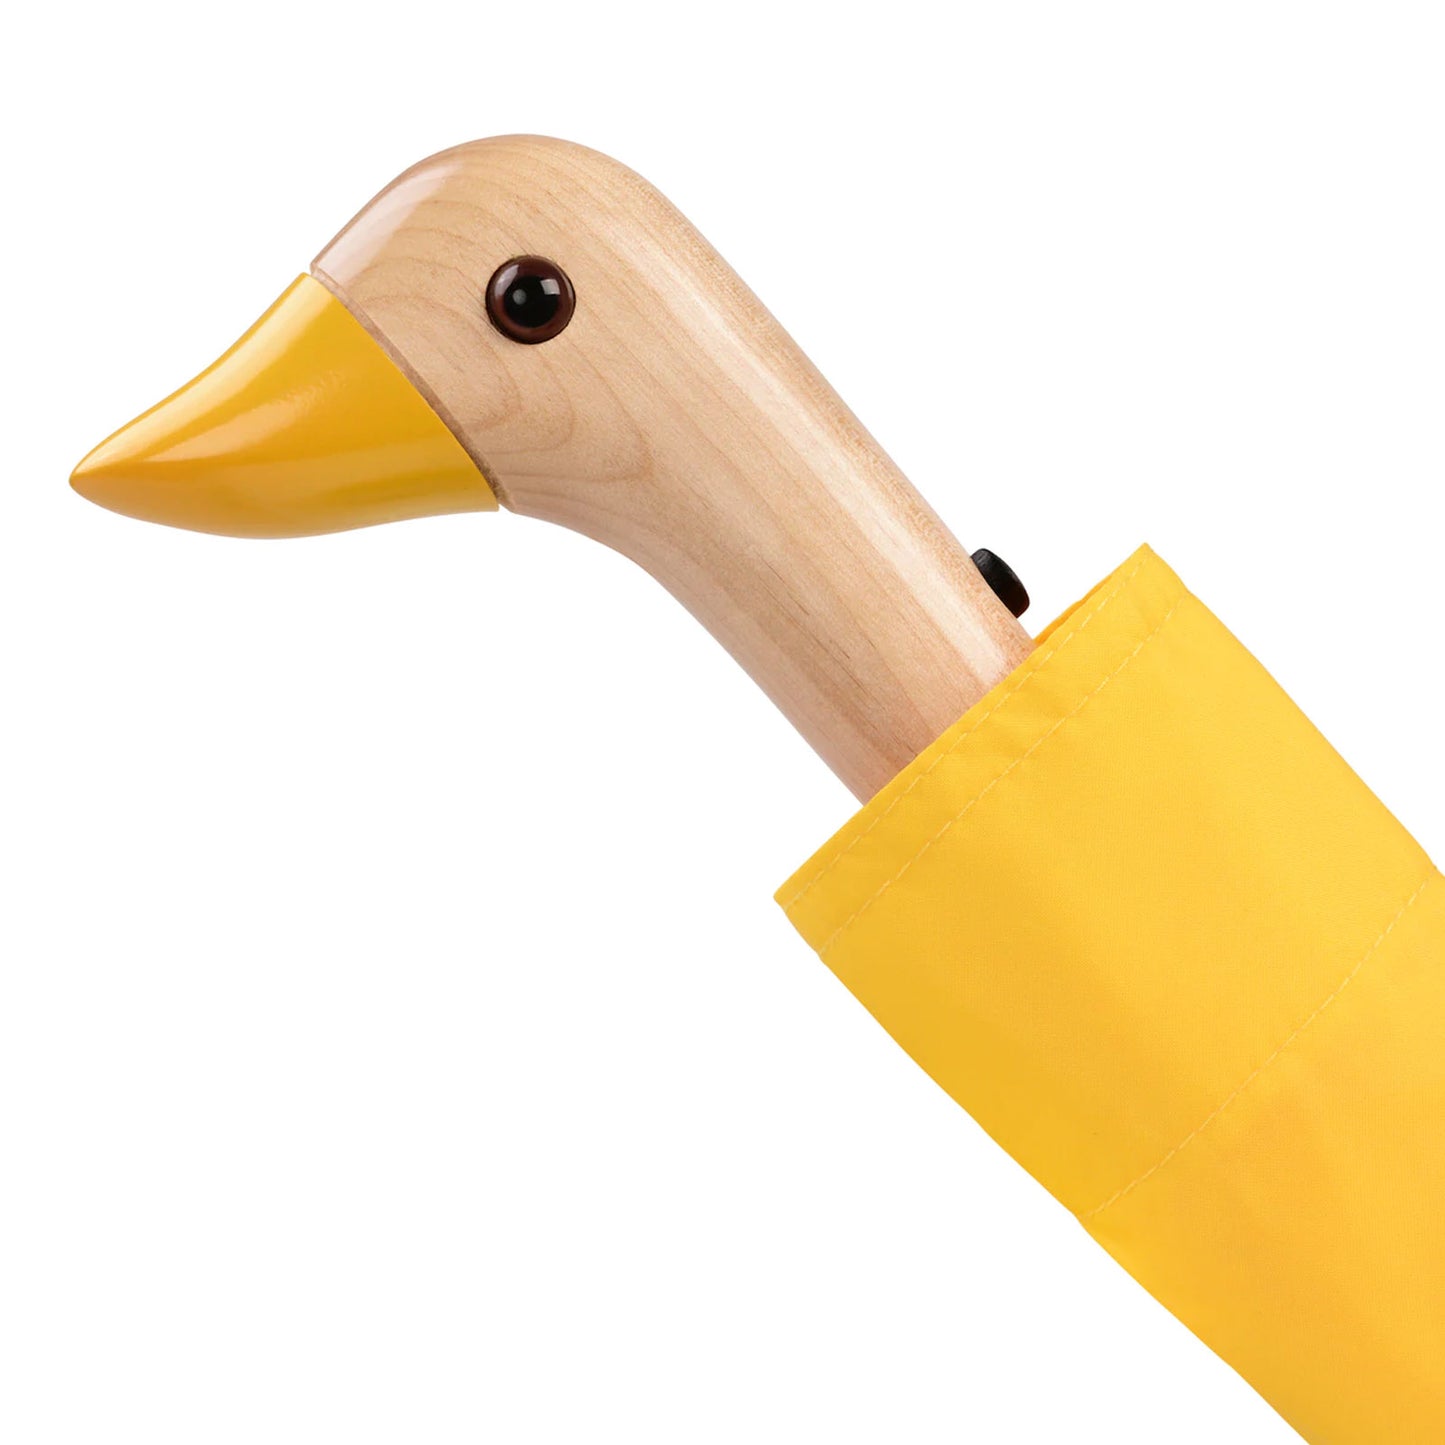 Original Duckhead Compact Umbrella, Yellow